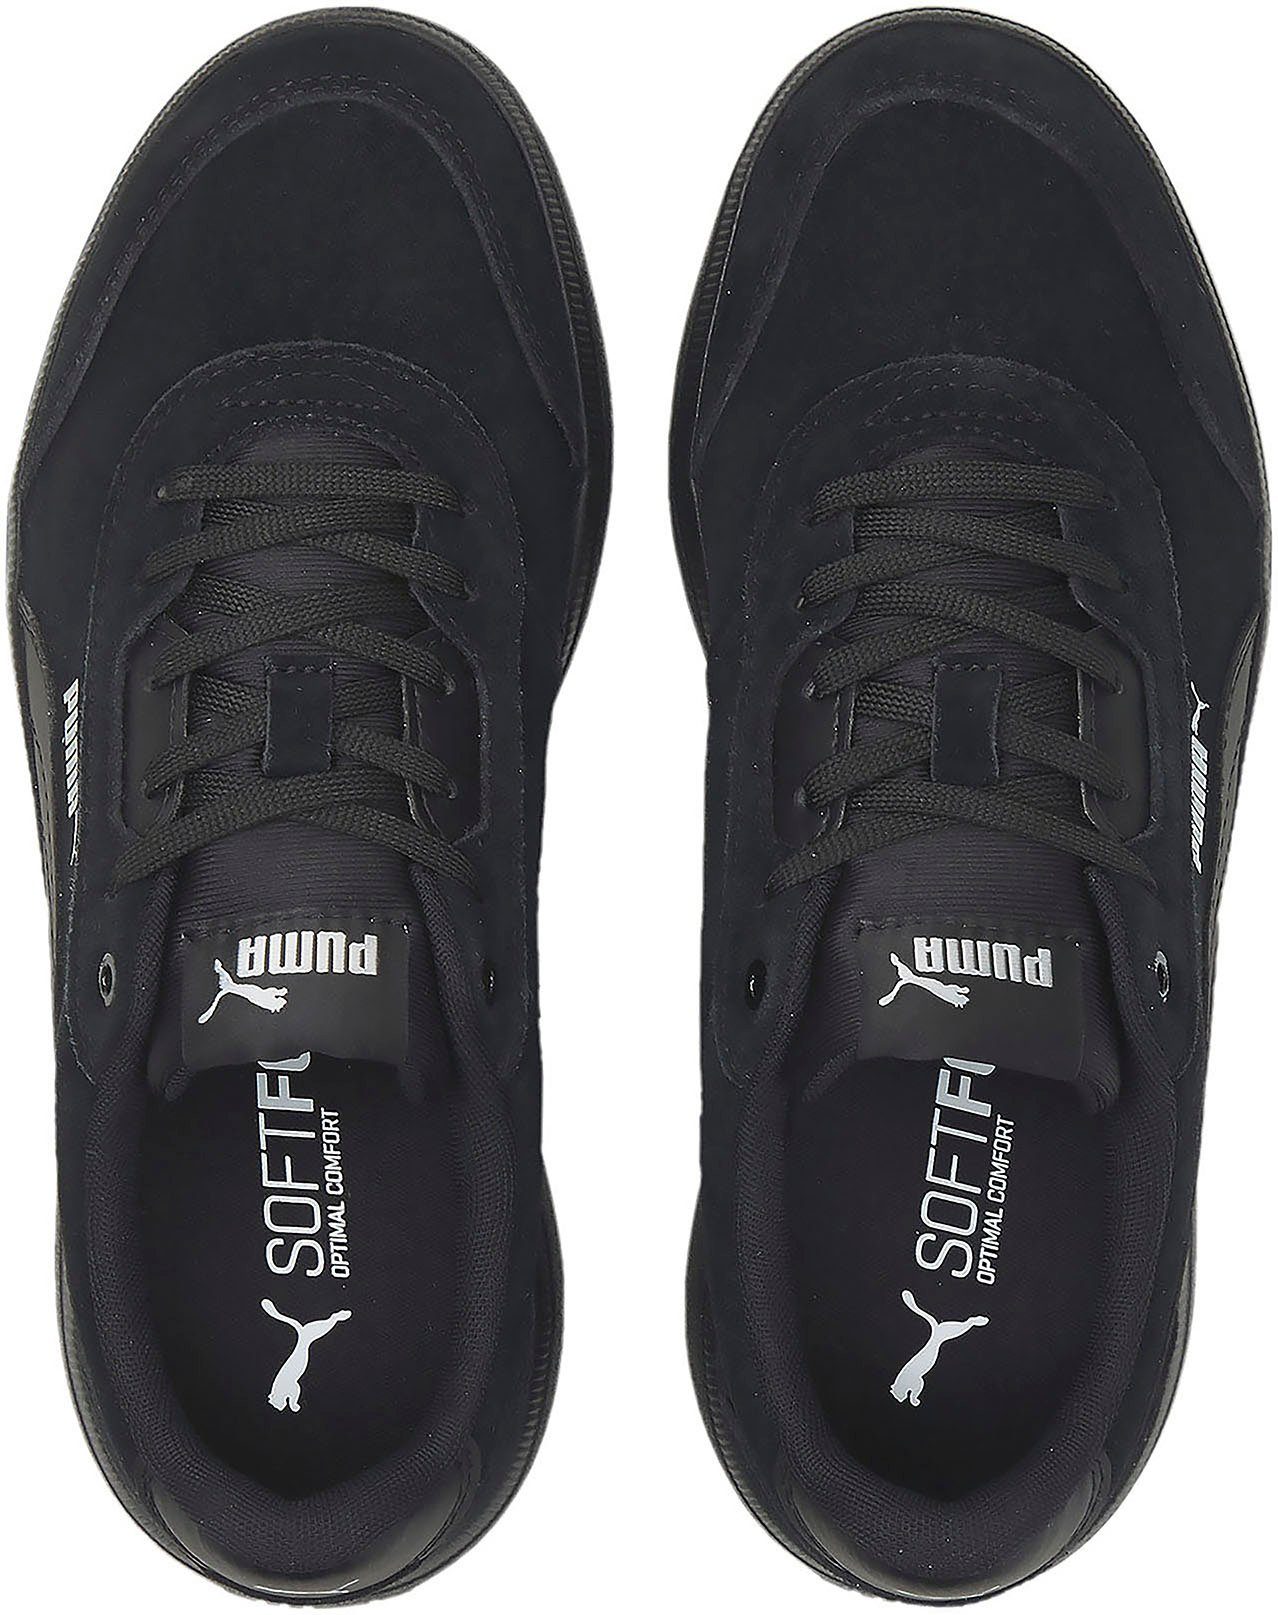 schwarz SD Sneaker PUMA Tori